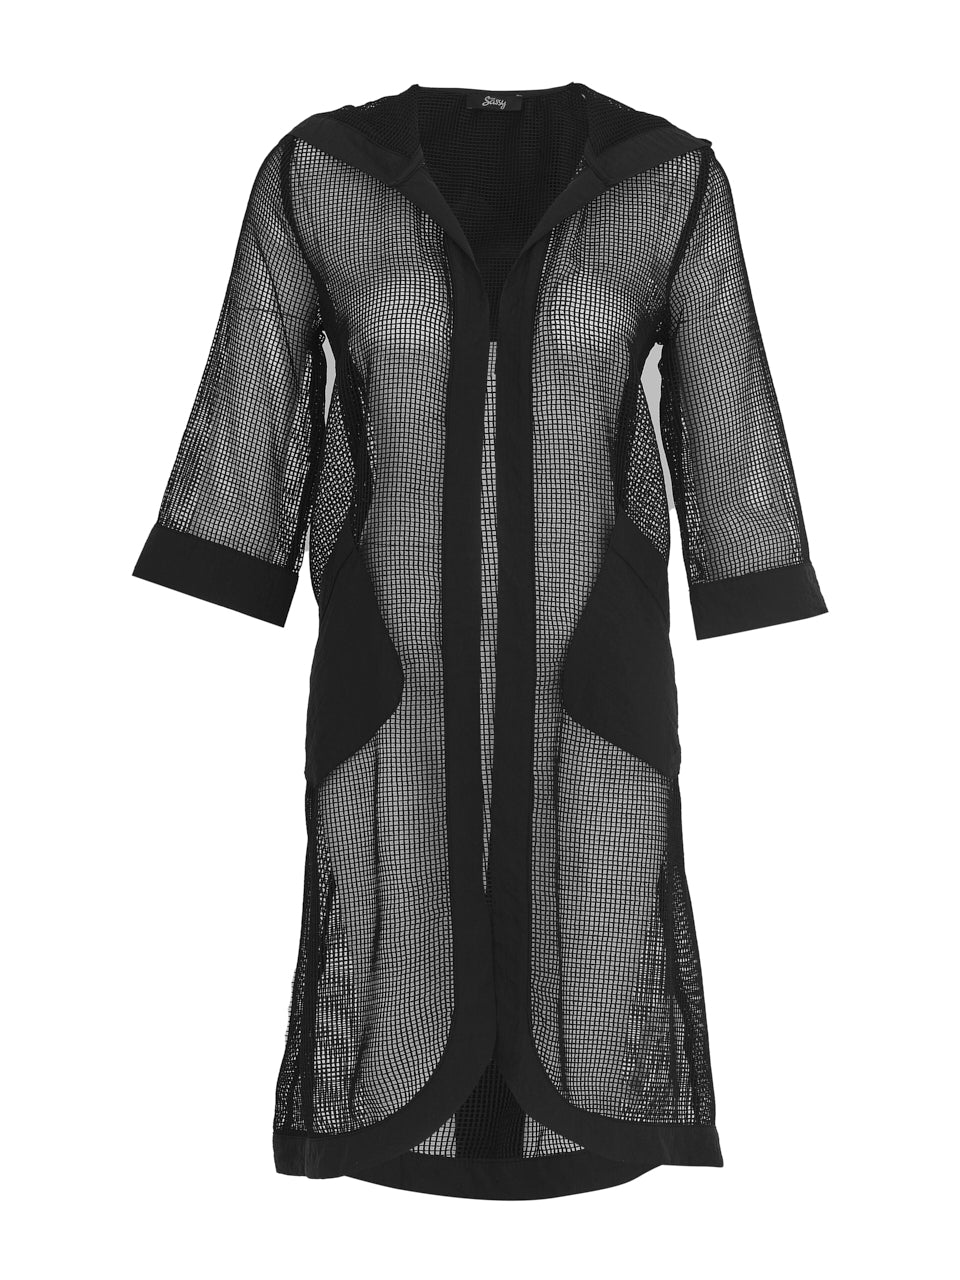 EverSassy mesh duster coat in black